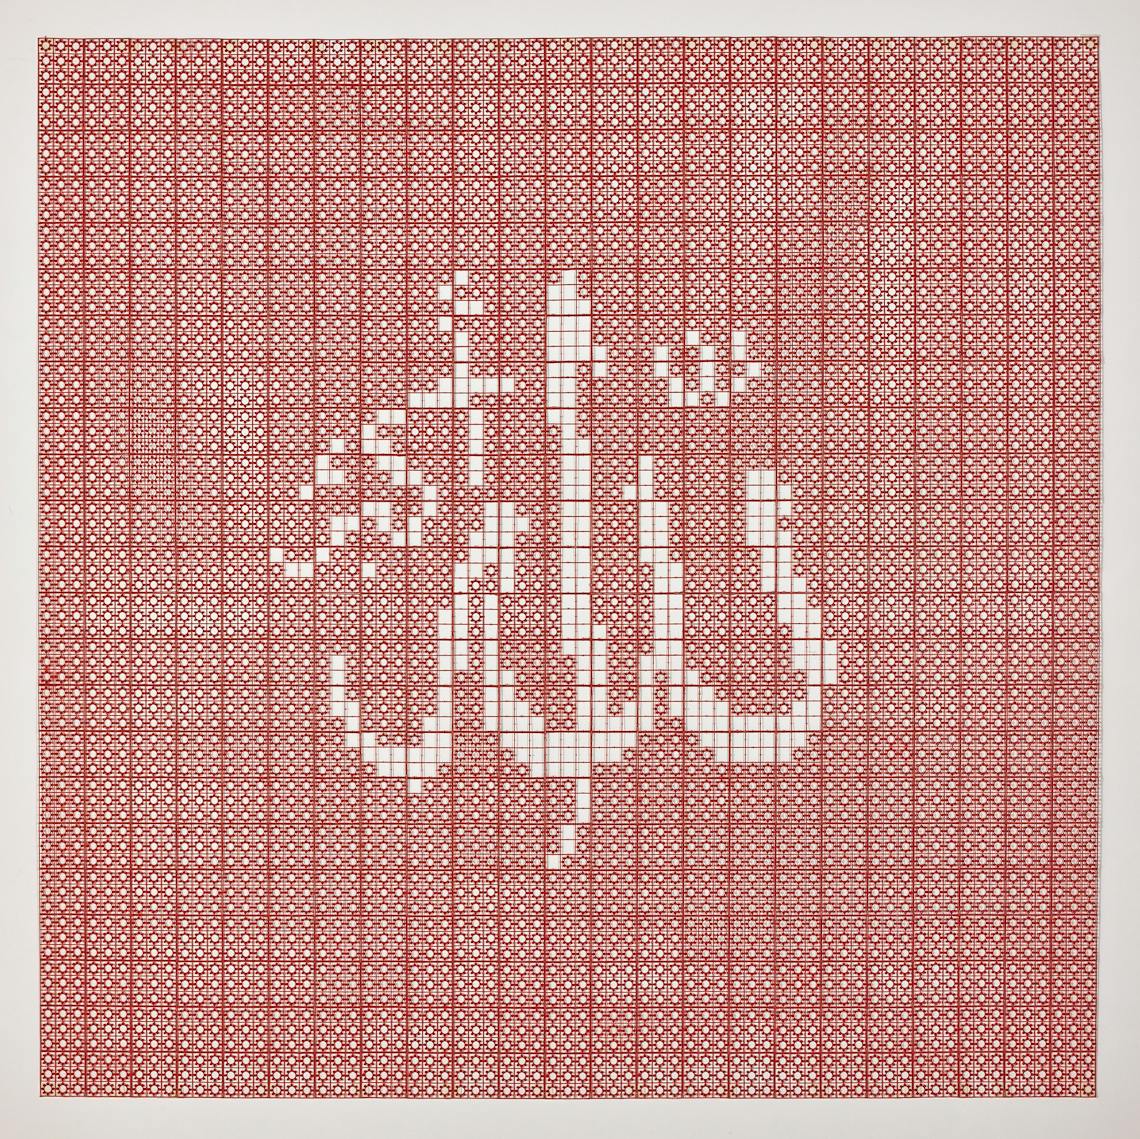 Allah O Akbar II 2011 Ahmed Mater Phastic toy gun caps glued together into sheets 100 x 150 cm ALLAHO AKBAR0175